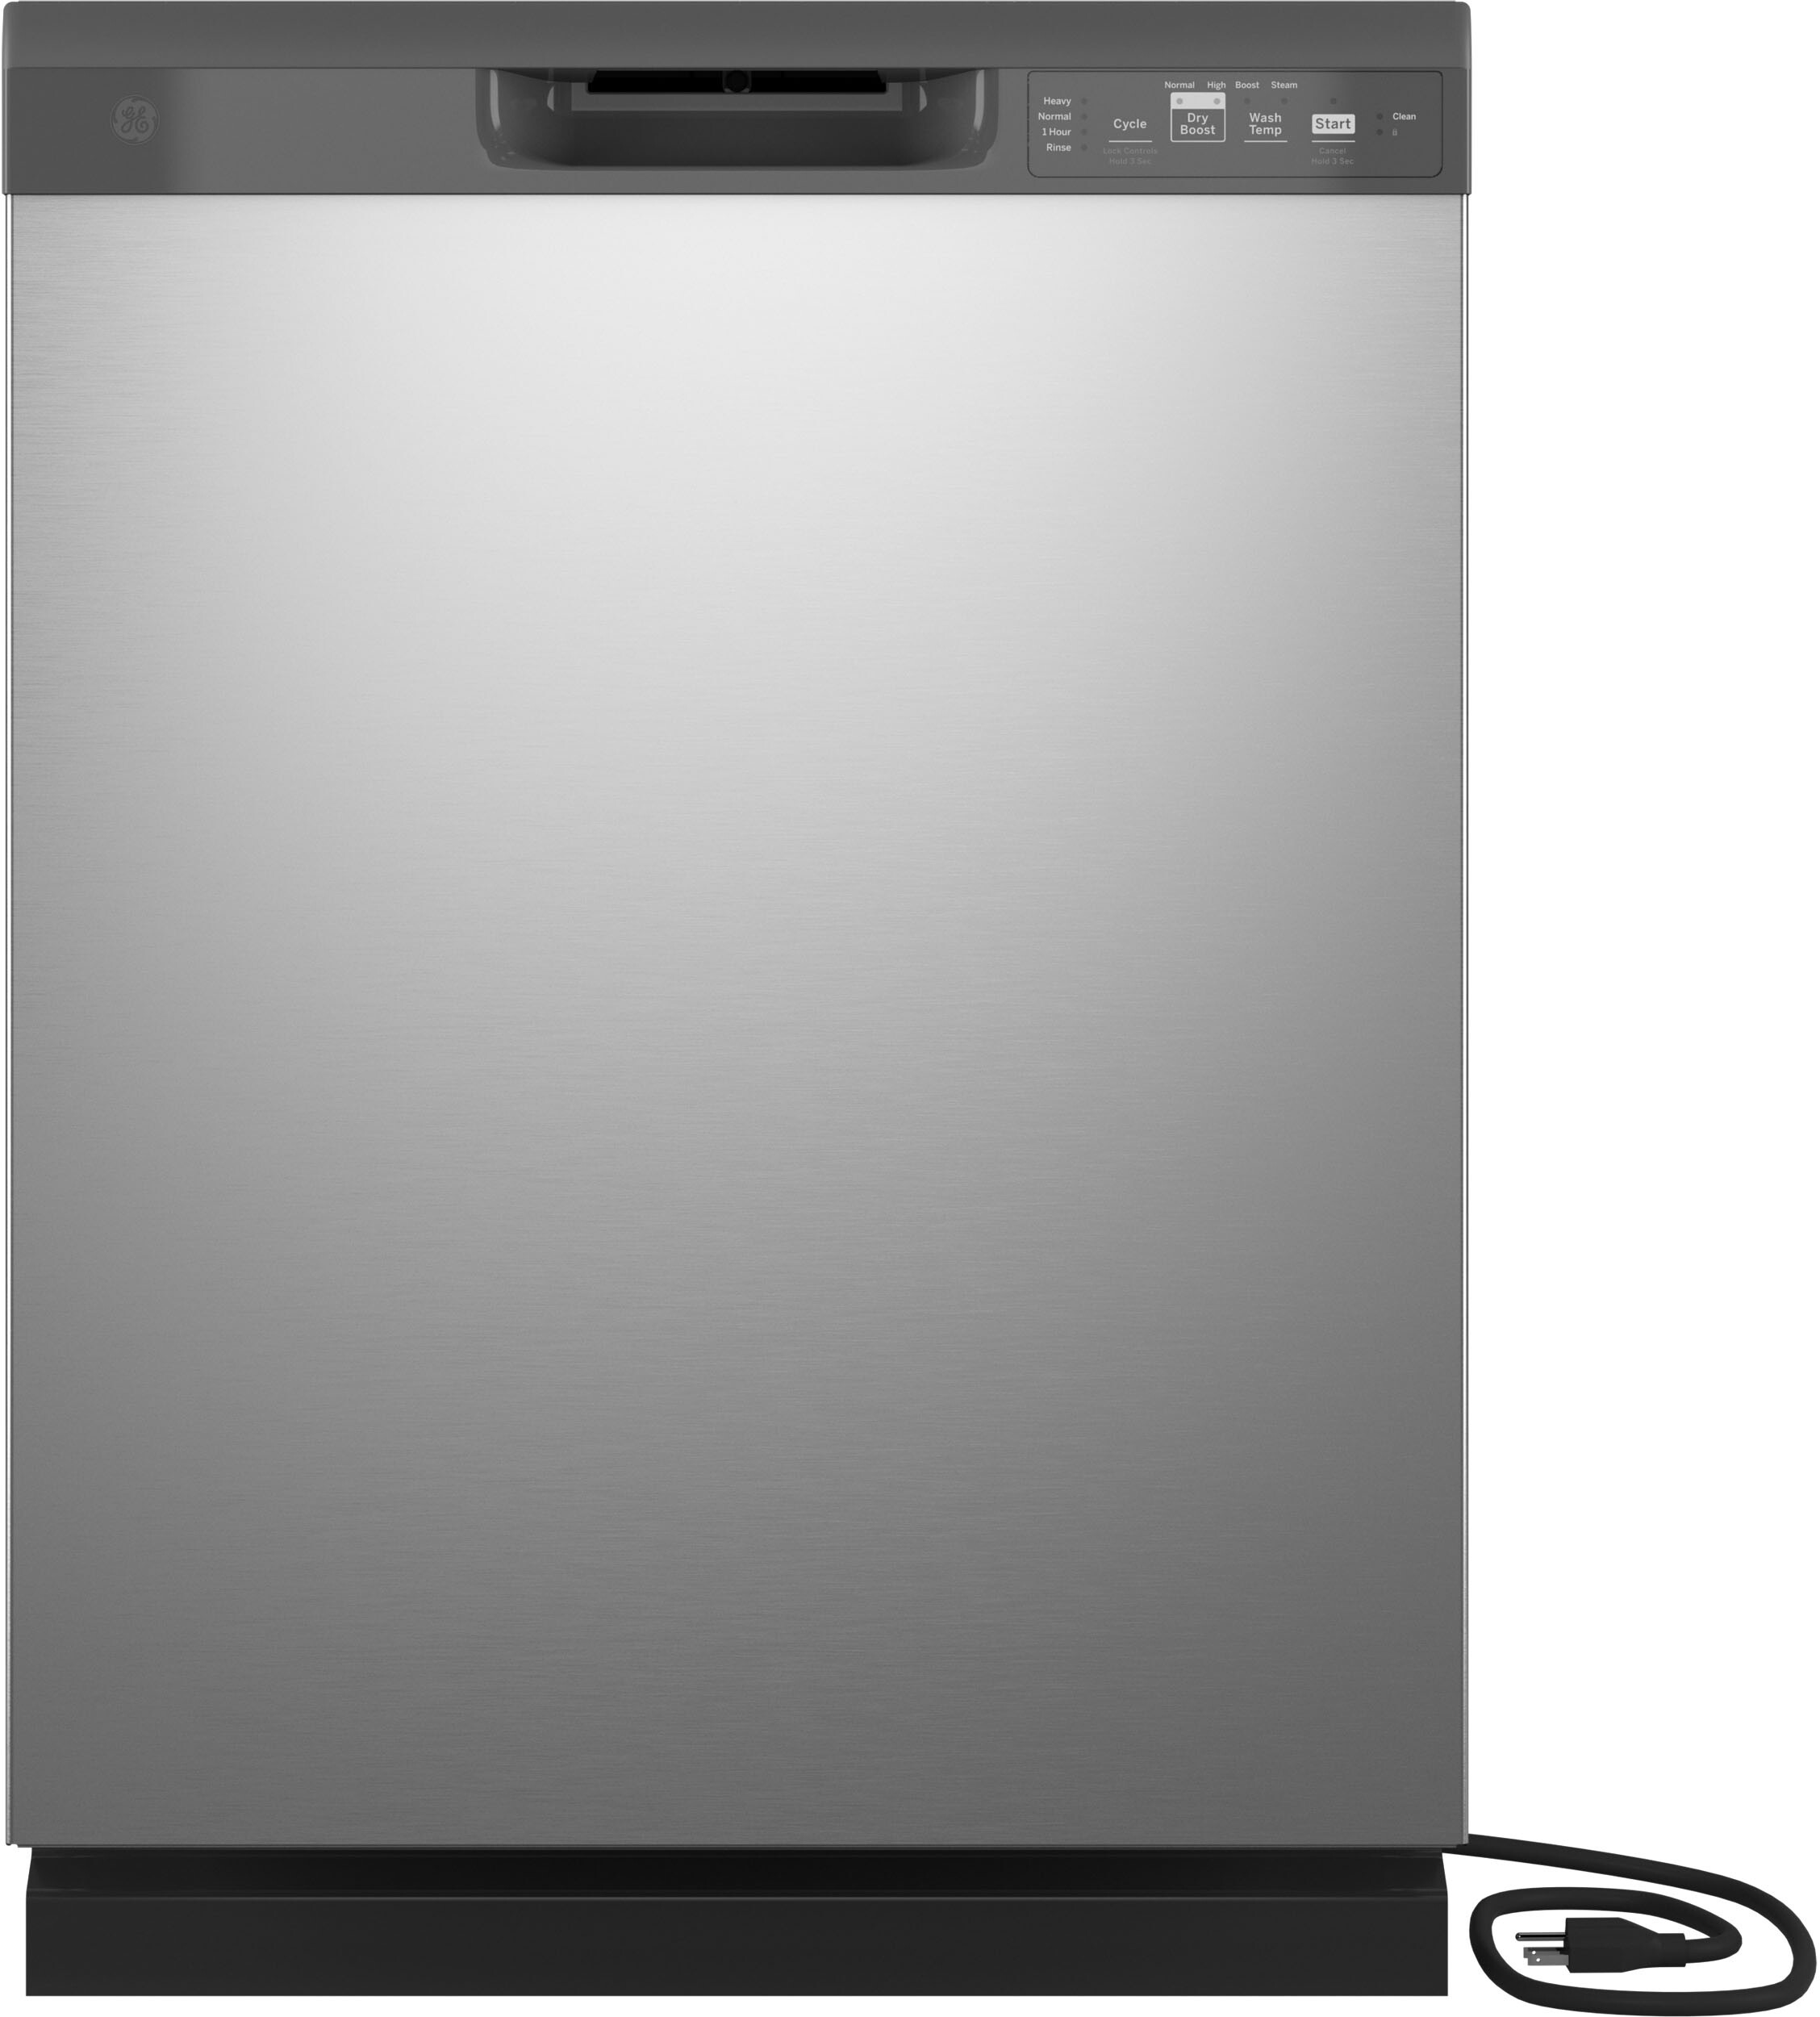 24"" Full Console Tall-Tub Dishwasher - GE GDF511PSRSS